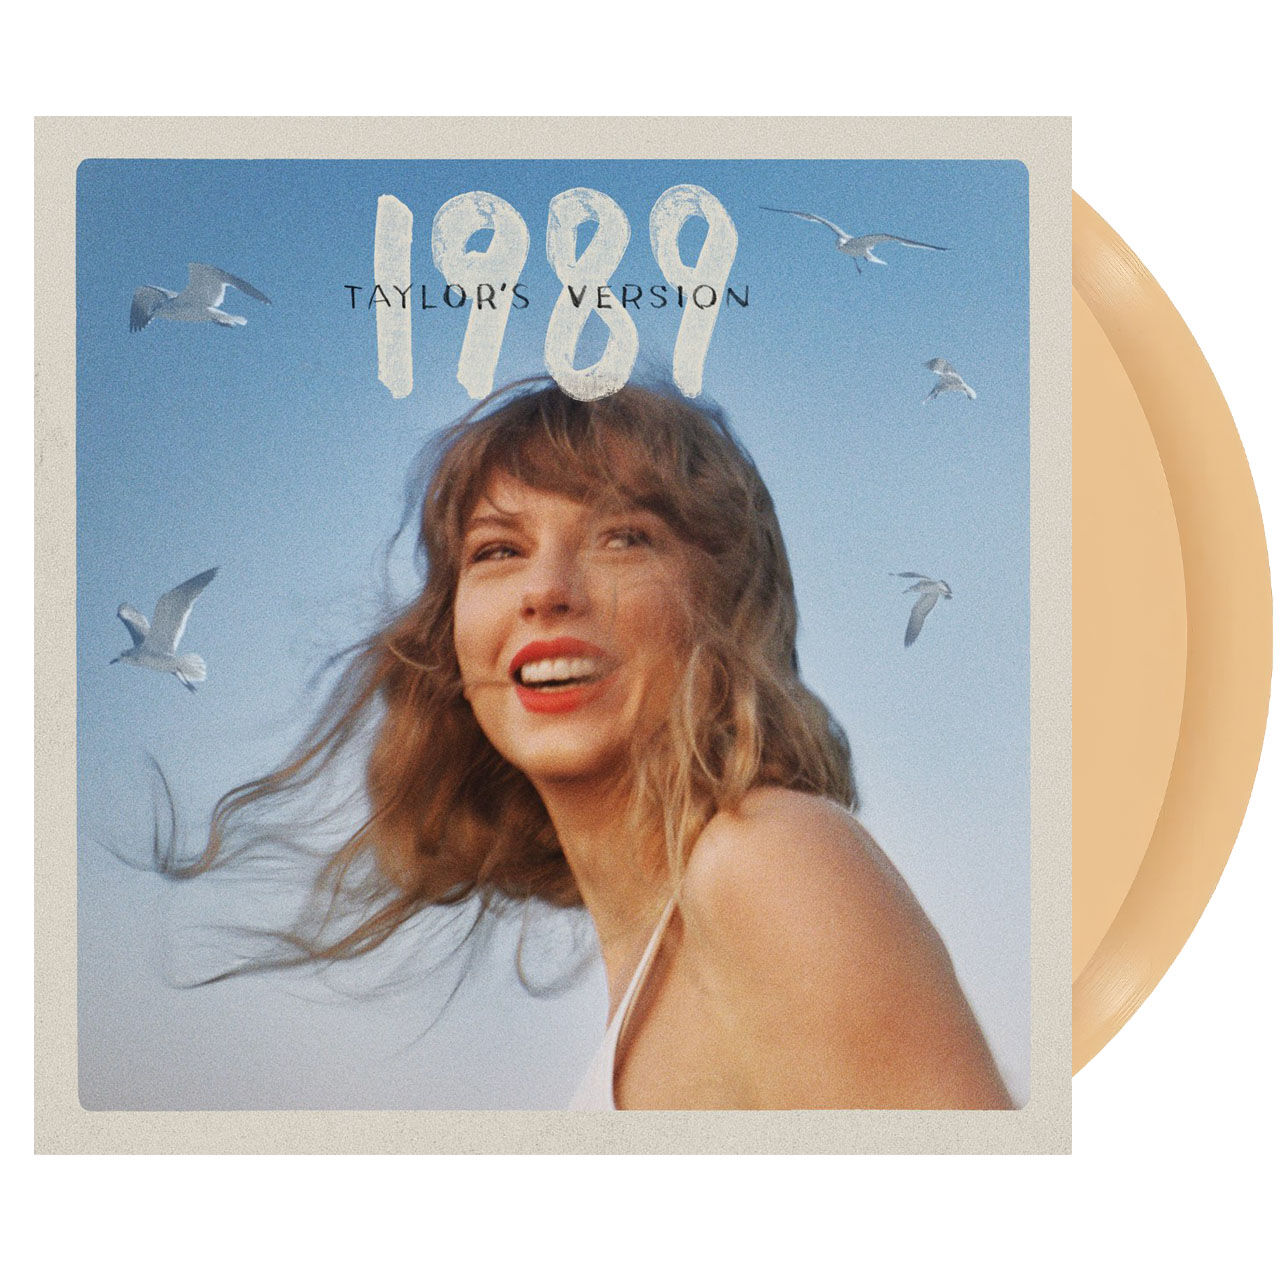 TAYLOR SWIFT 1989 (Taylor’s Version) Tangerine 2LP Vinyl EU